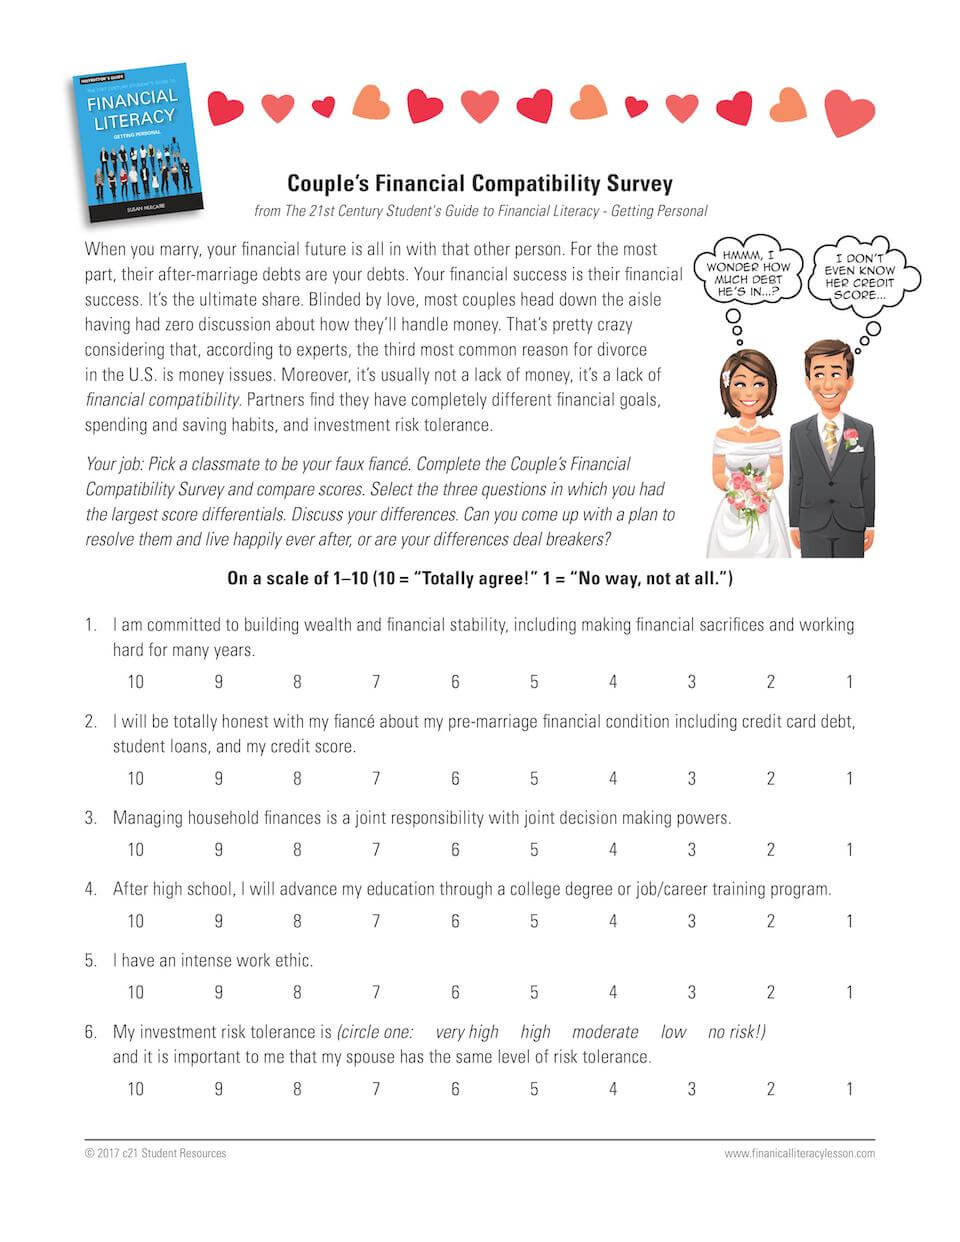 Couple’s Financial Compatibility Survey cover